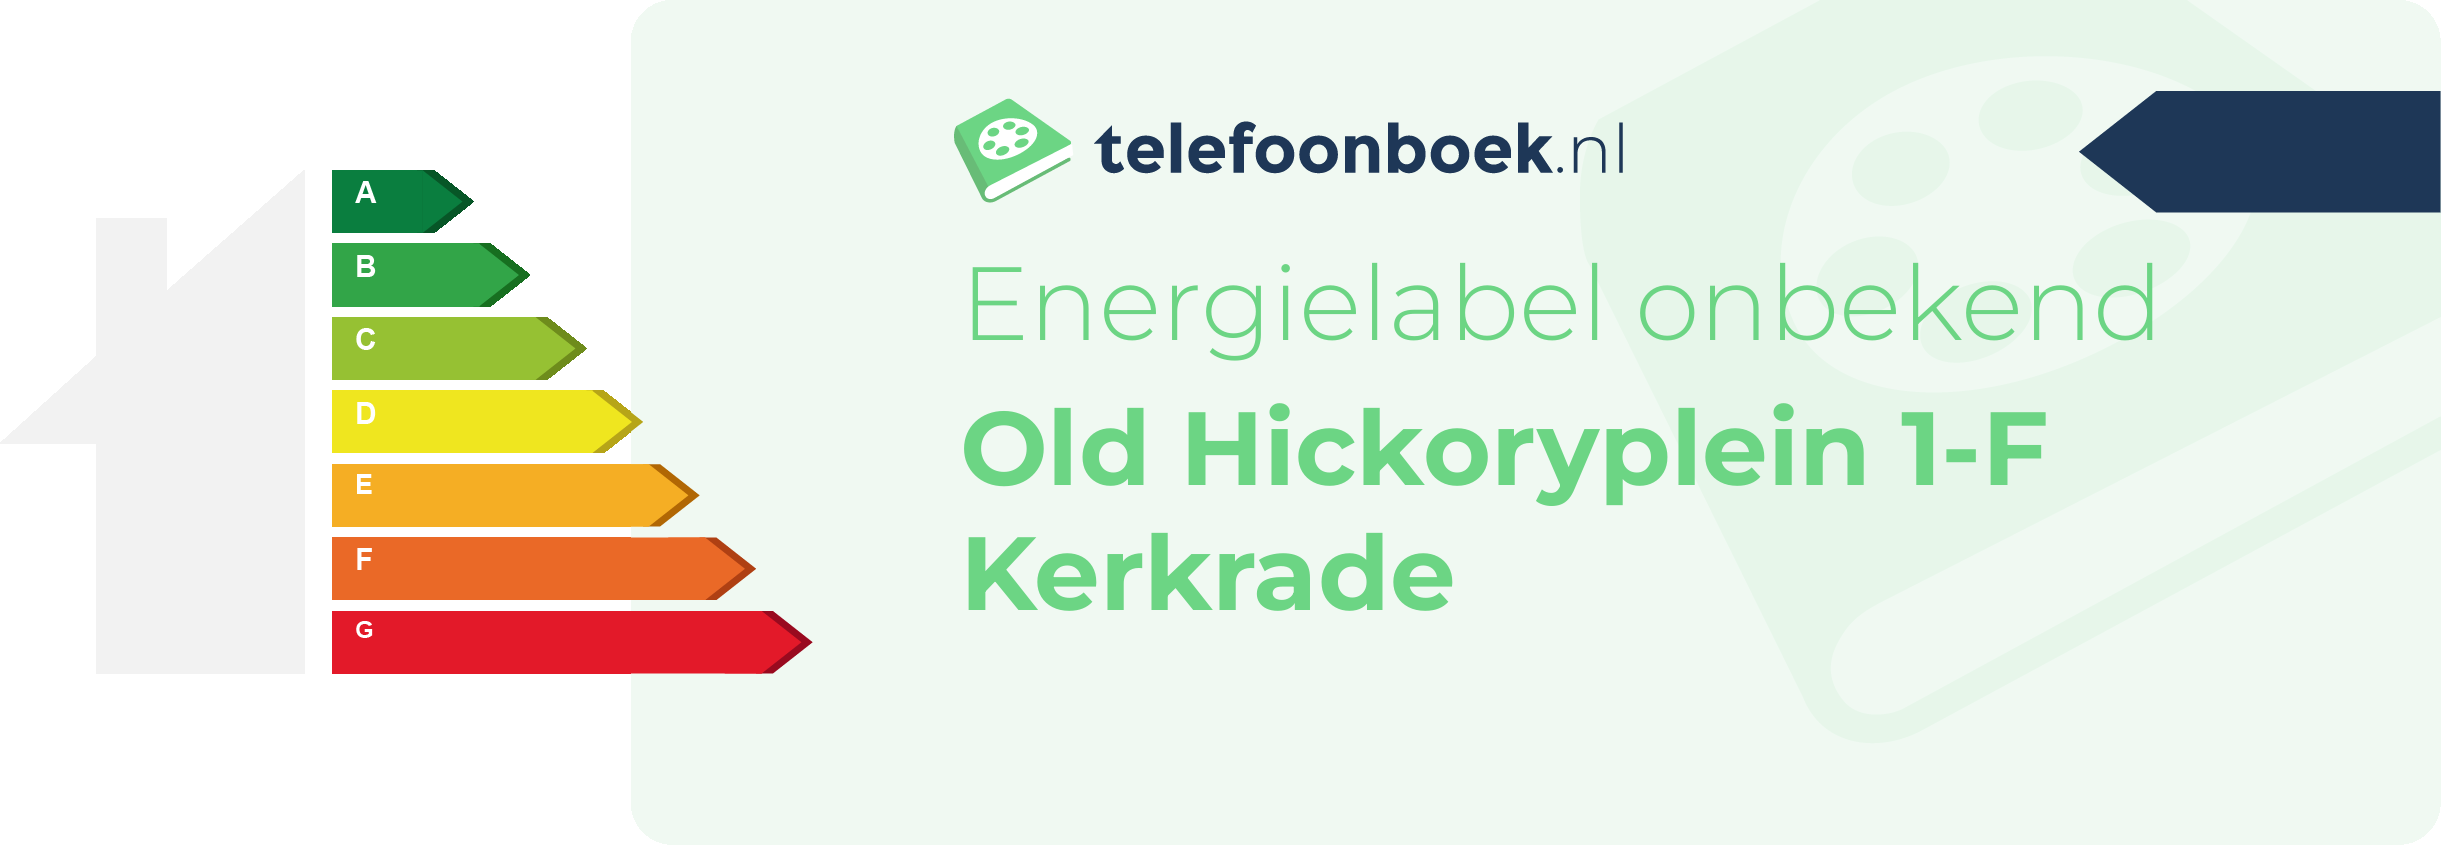 Energielabel Old Hickoryplein 1-F Kerkrade